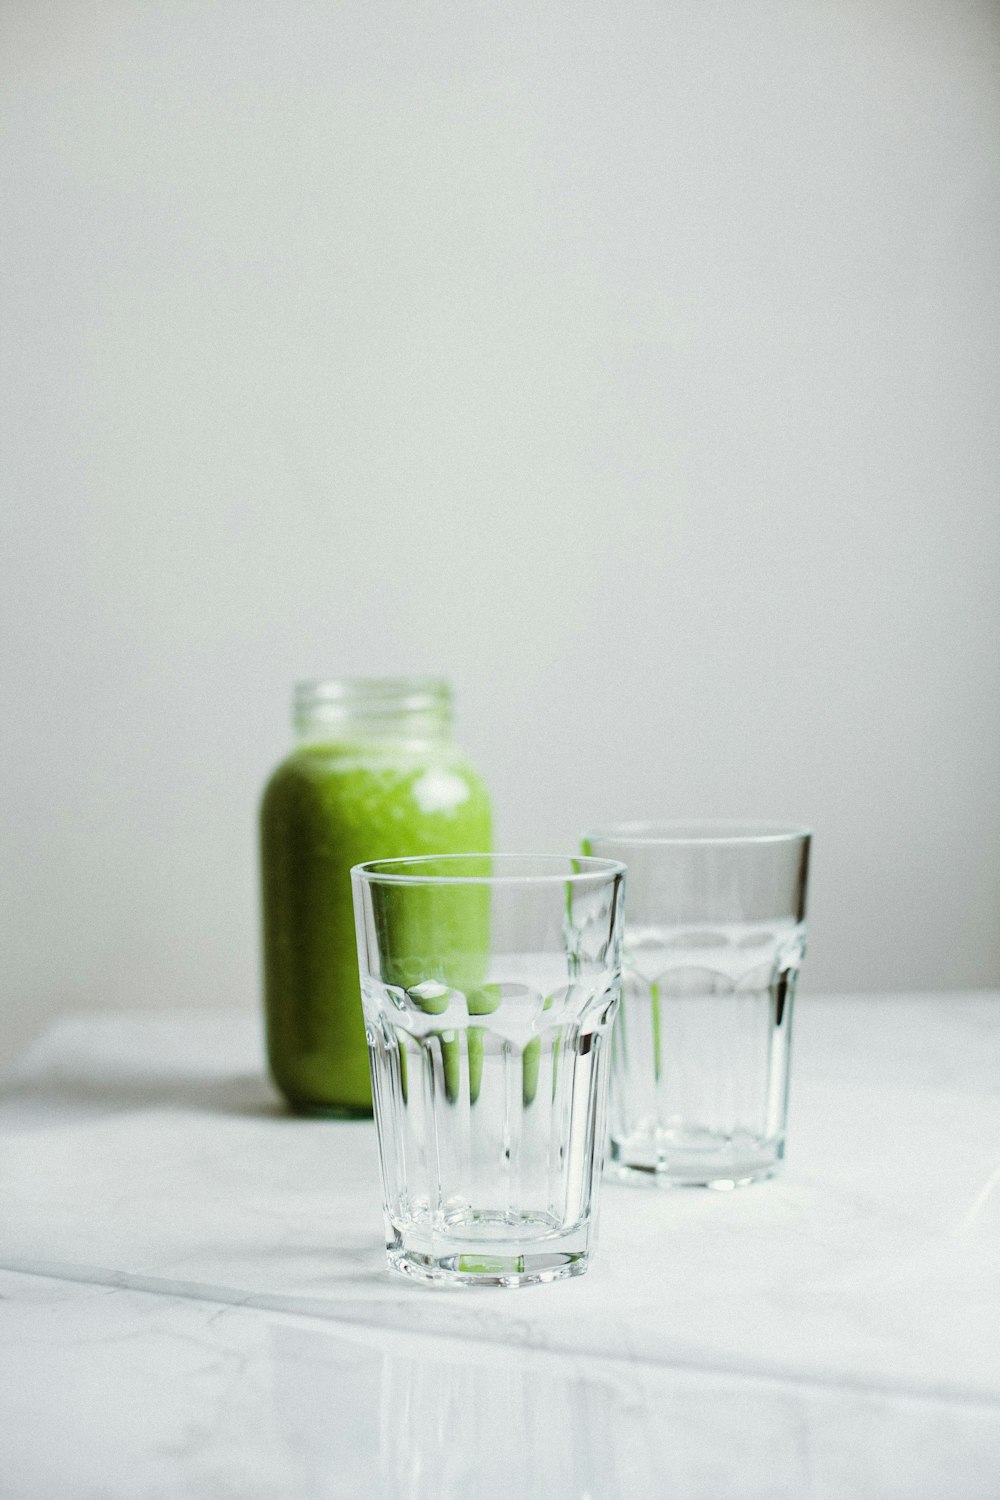 green fruit in clear glass jar